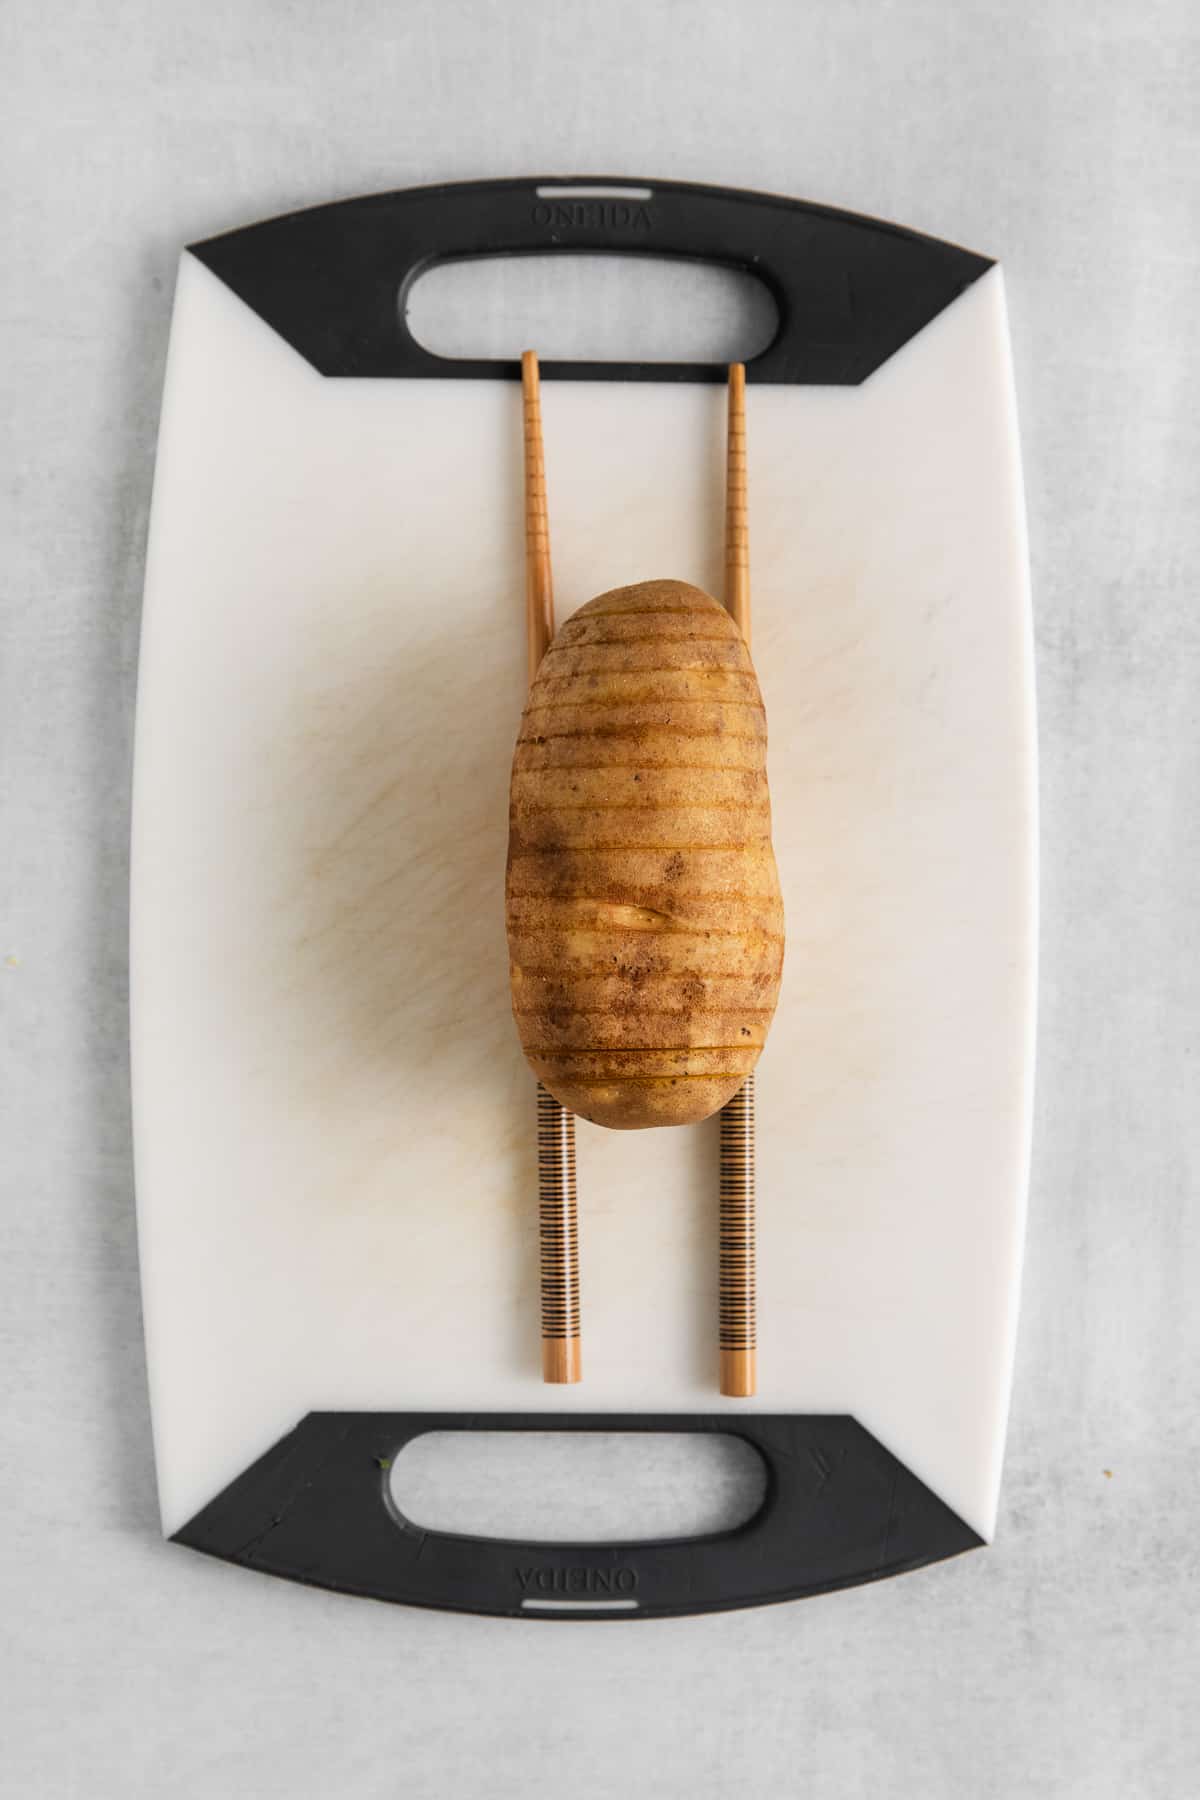 Potato sliced hasselback style on a cutting board.